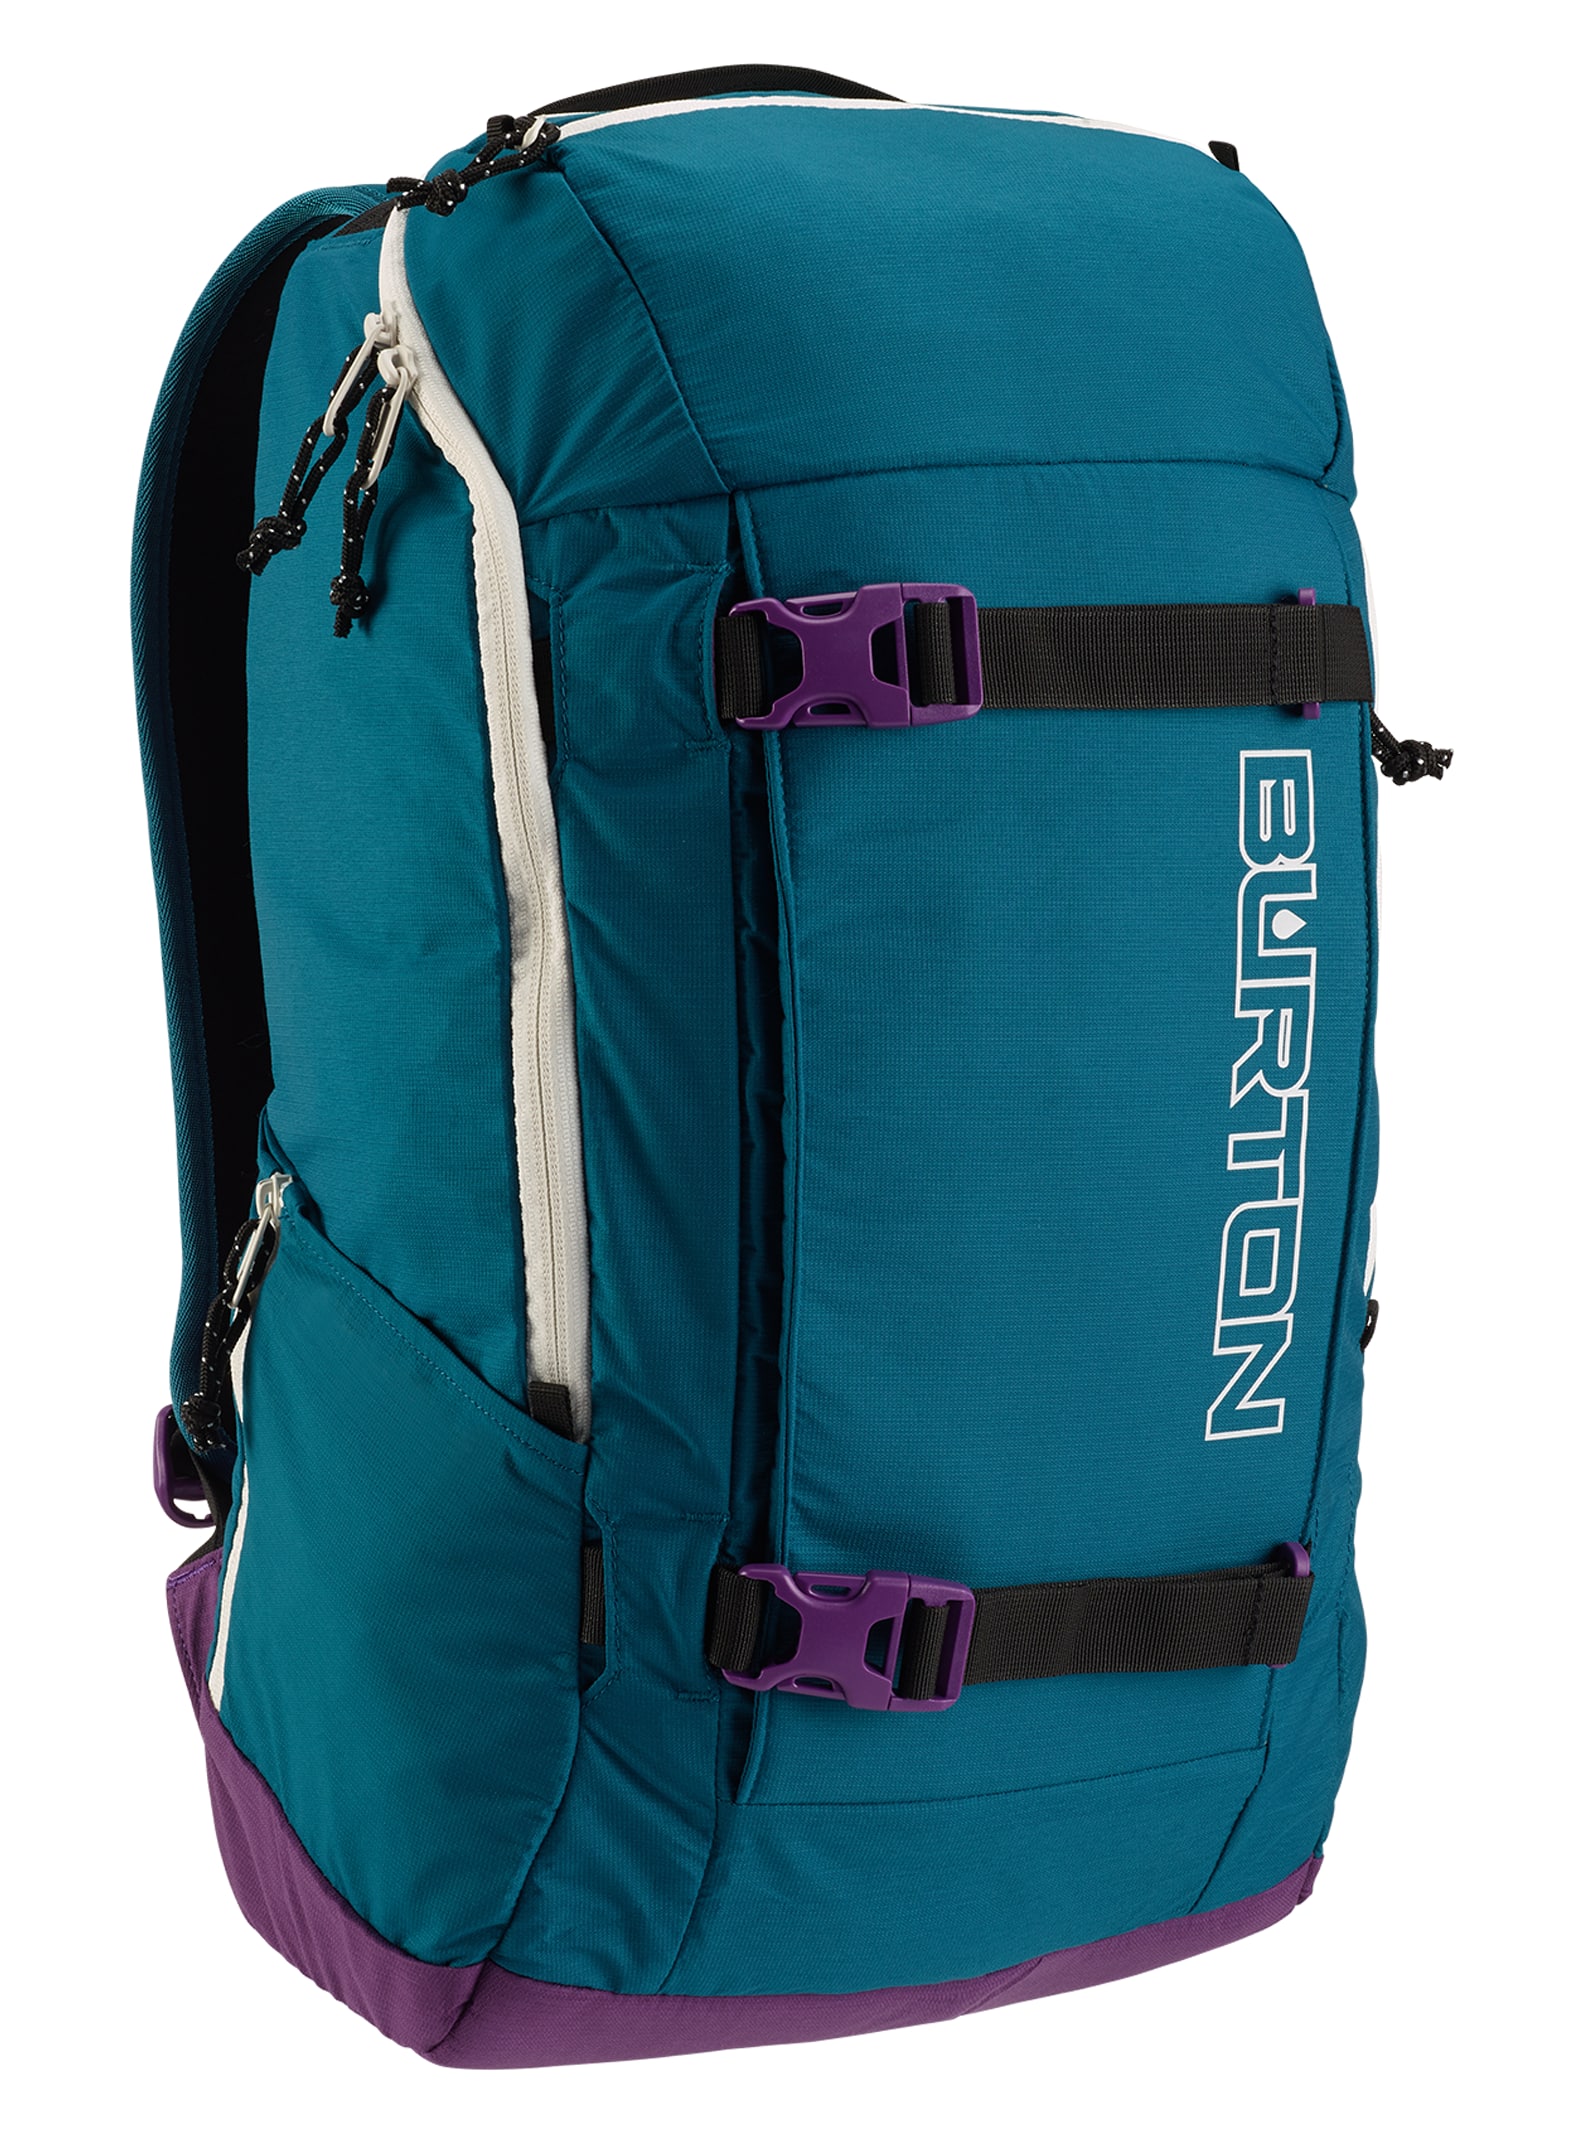 Burton Kilo 2.0 27L Solution-Dyed Backpack | Burton.com Spring 2020 JP